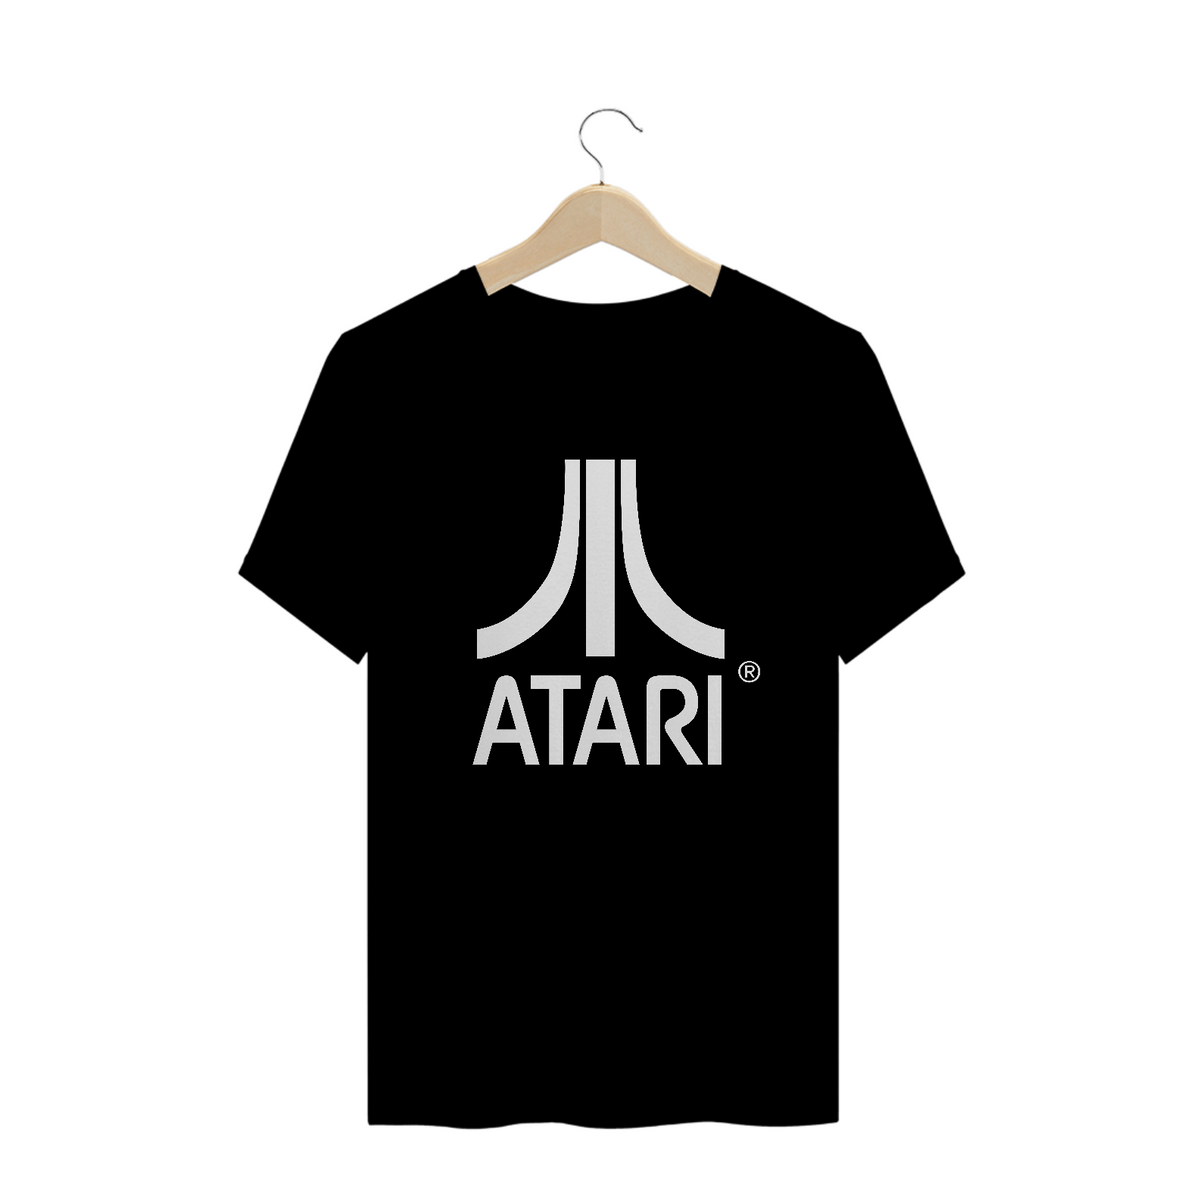 Nome do produto: T-SHIRT ATARI